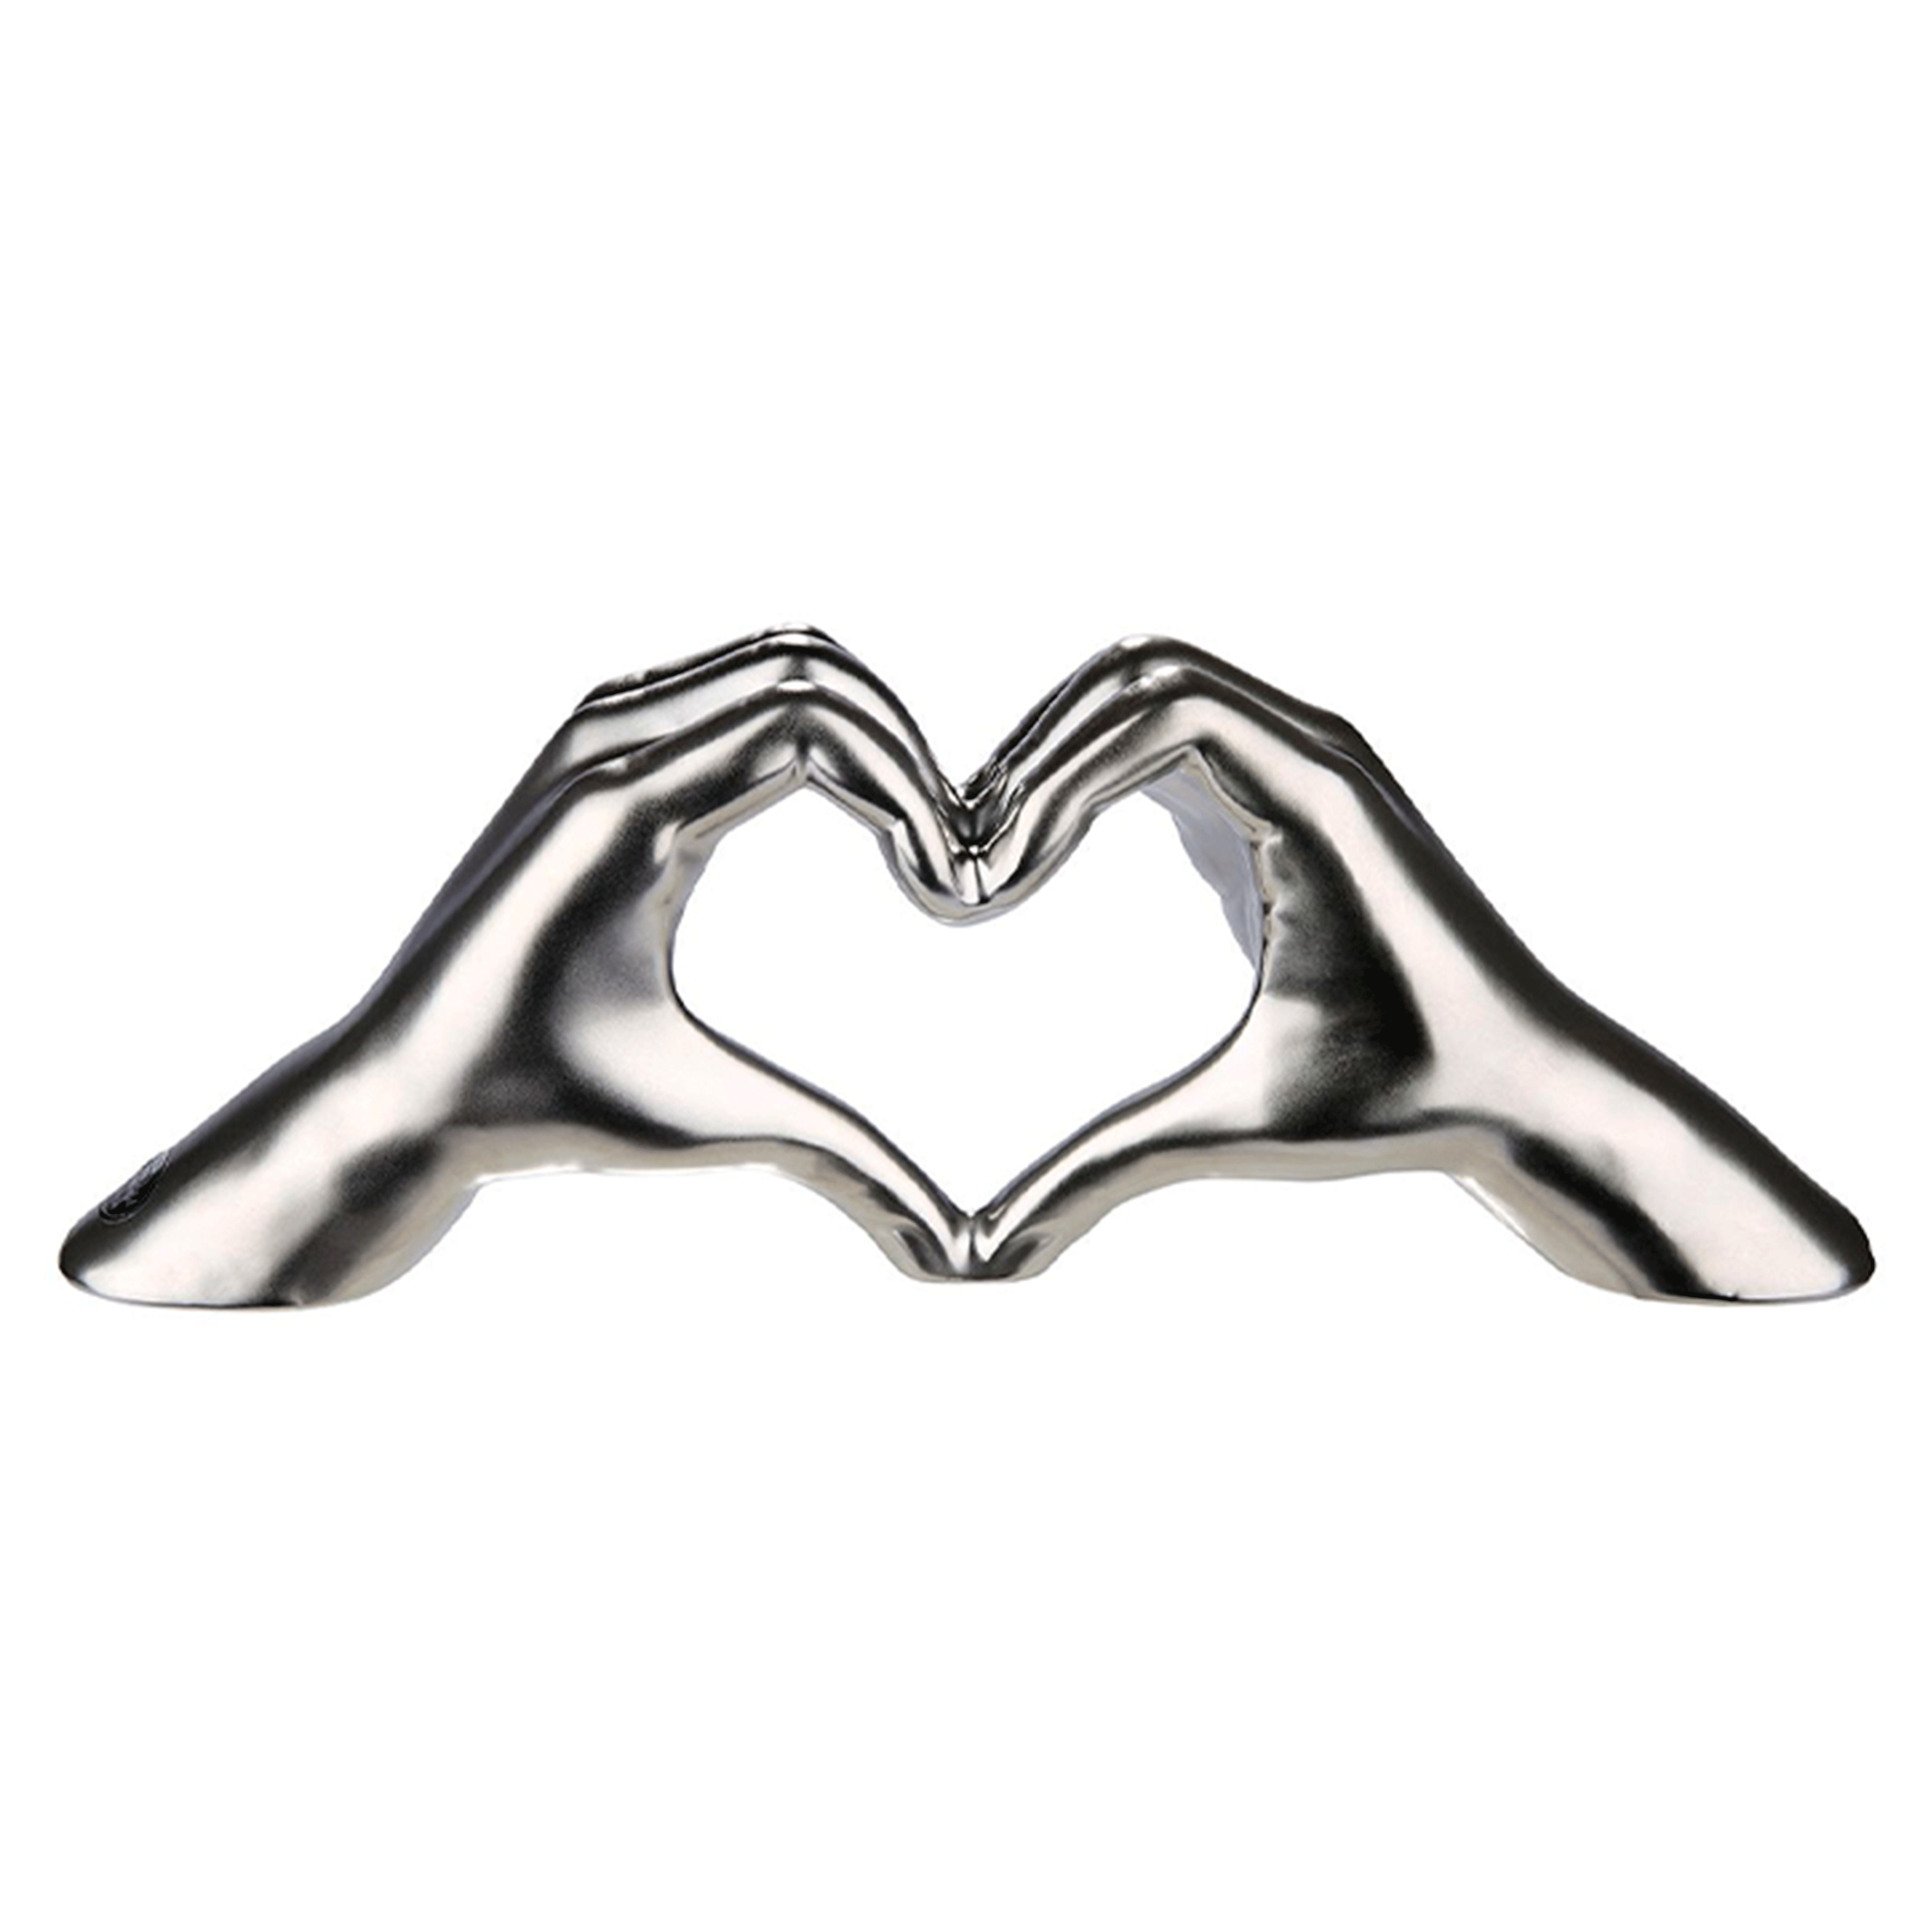 Sculpture - Heart in Hand - Ceramic